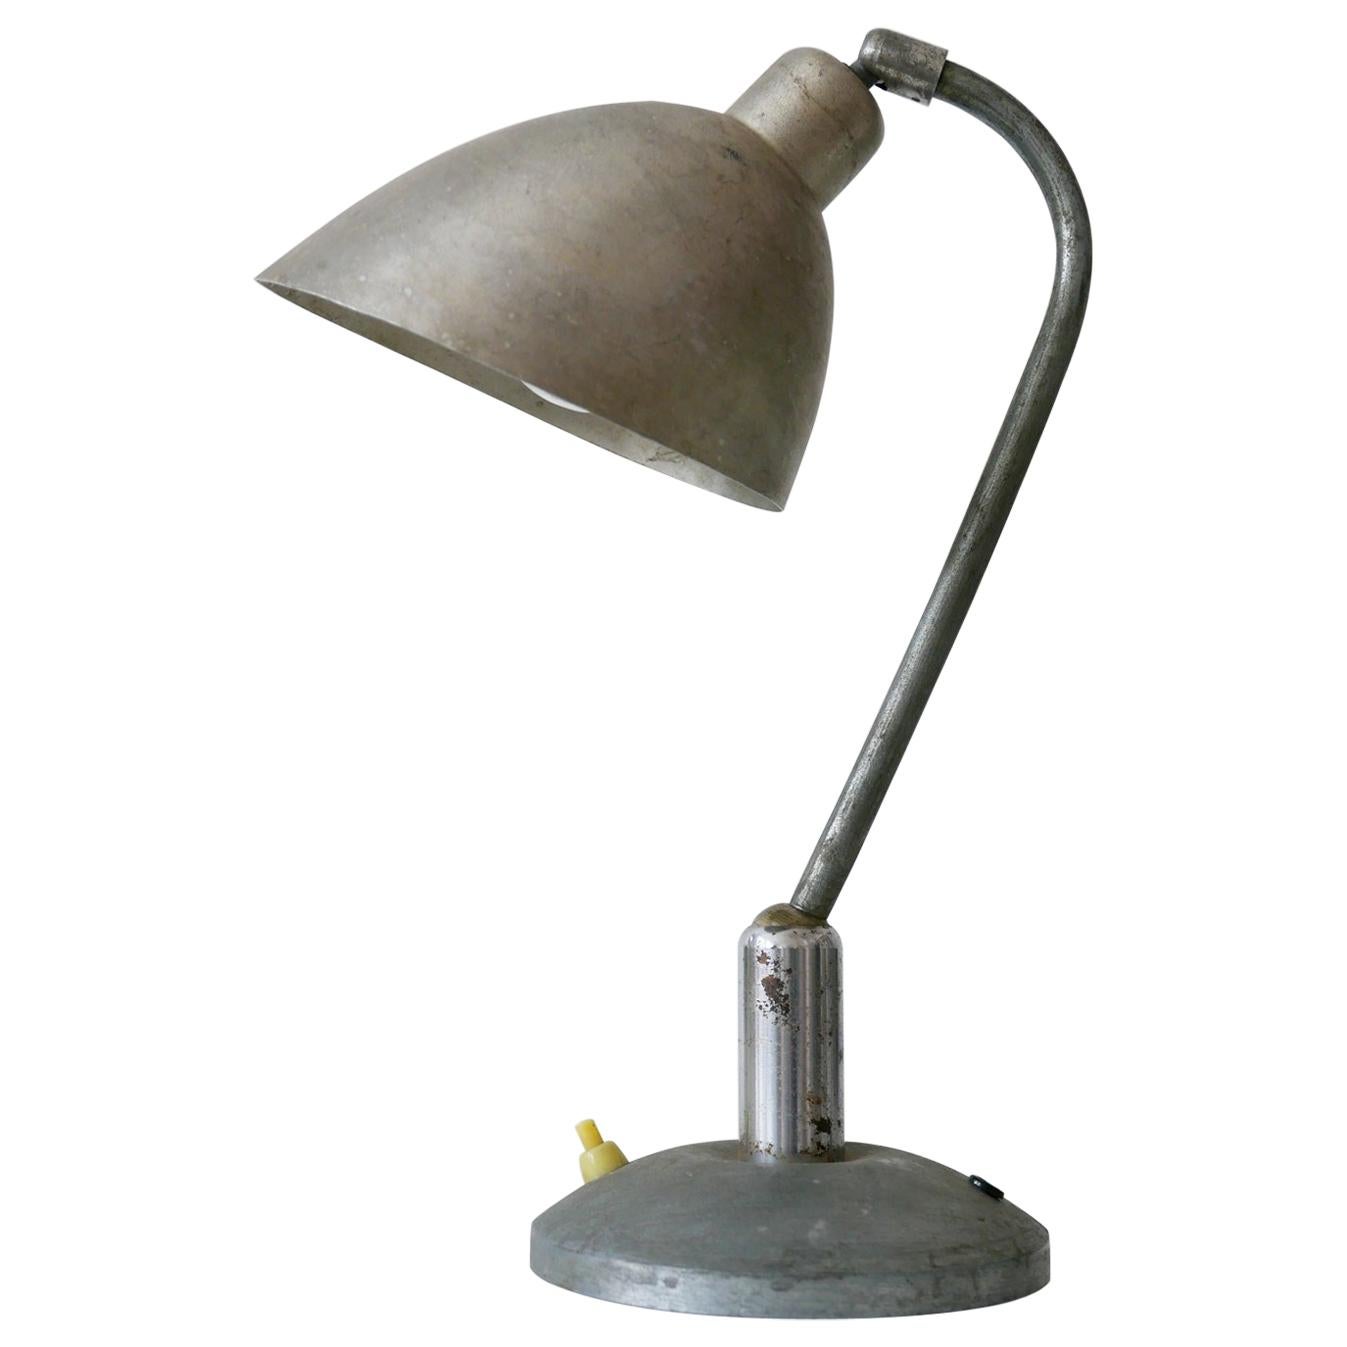 Rare Czech Functionalist or Bauhaus Table Lamp by Franta ‘Frantisek’ Anyz, 1920s